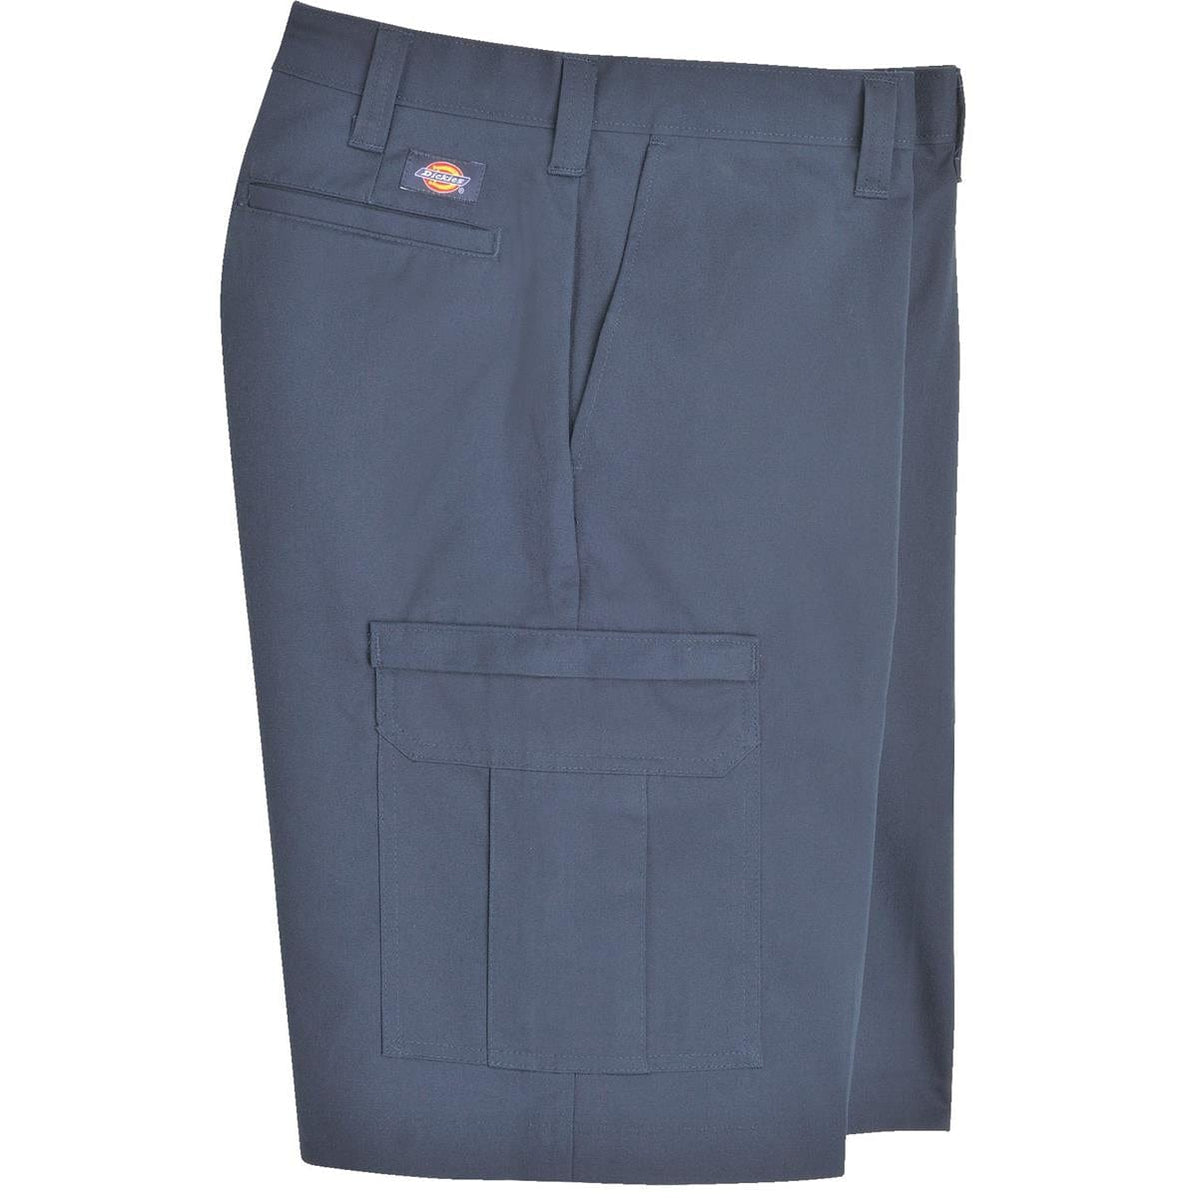 Dickies | Work Pants & Shirts | Gempler's